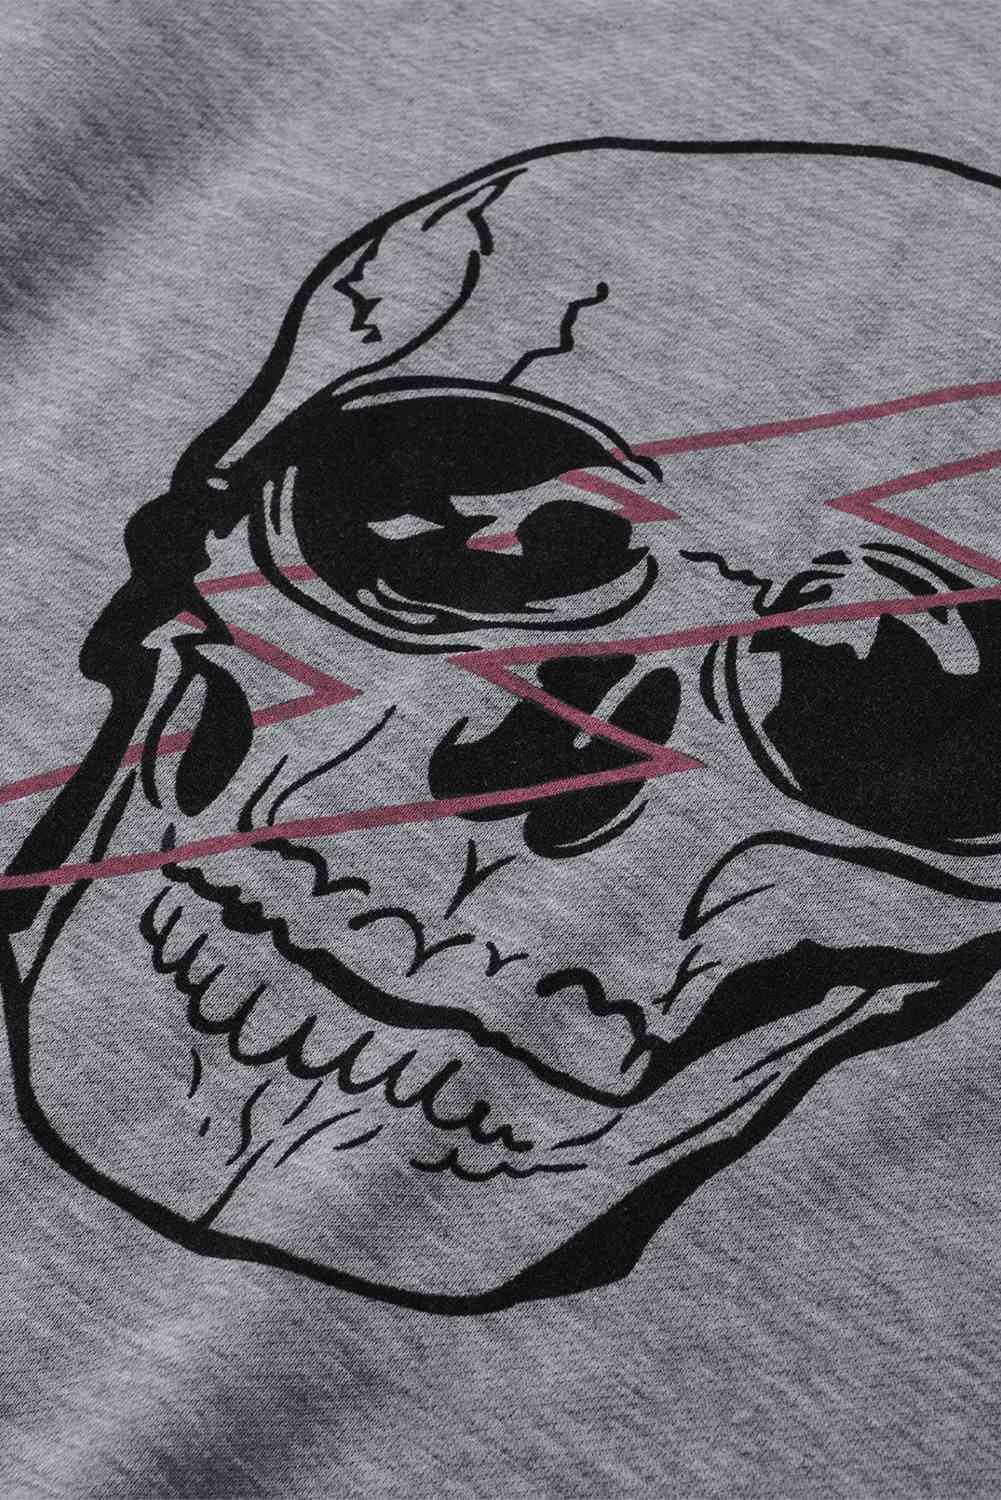 Halloween Skull and Lightning Graphic Tee - Immenzive